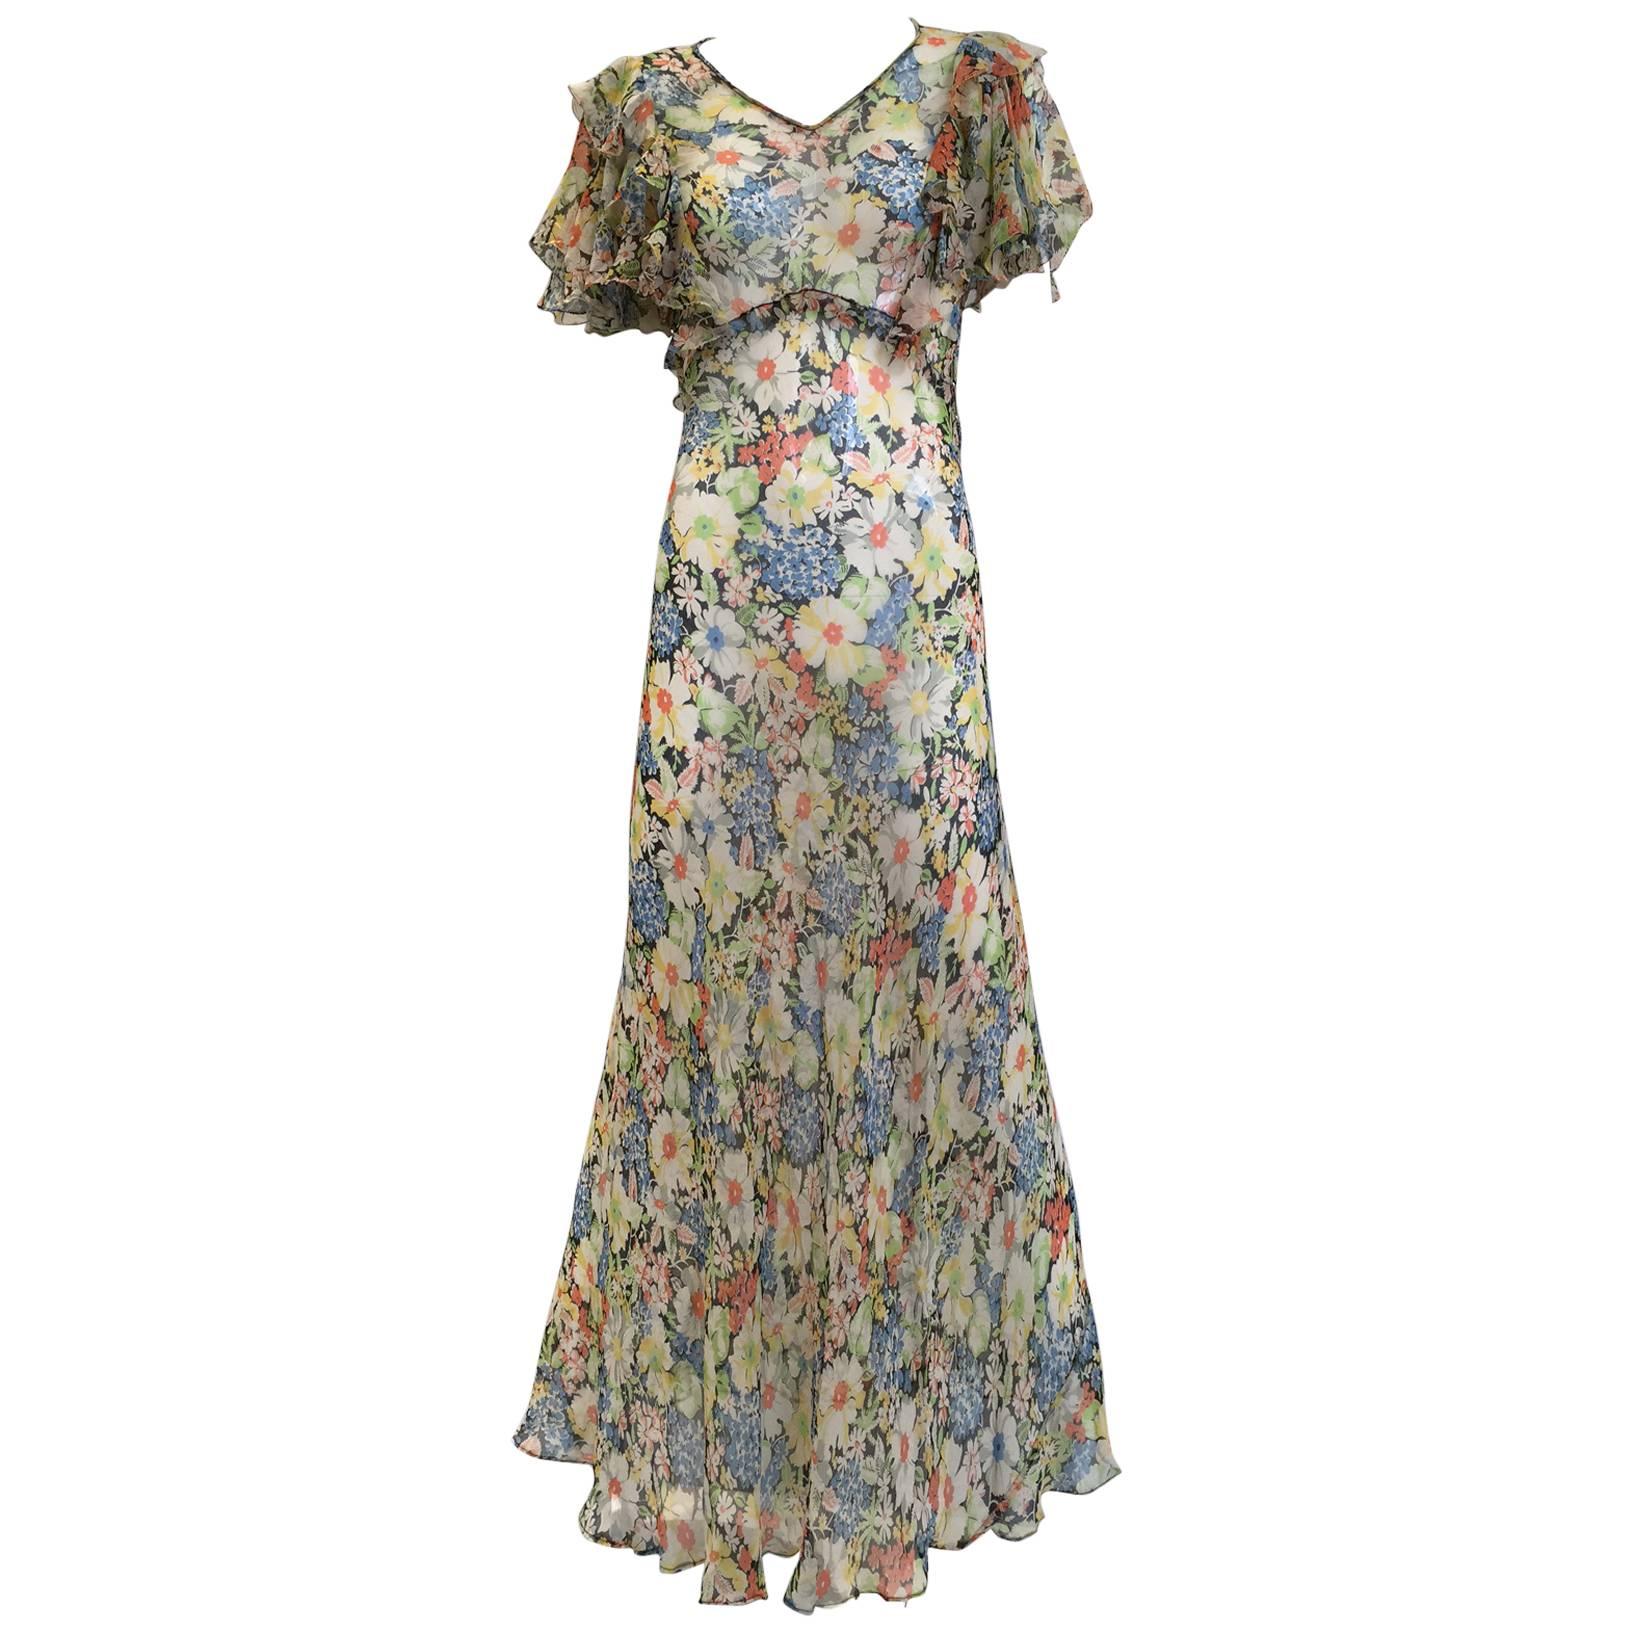 1930s silk chiffon floral print summer dress